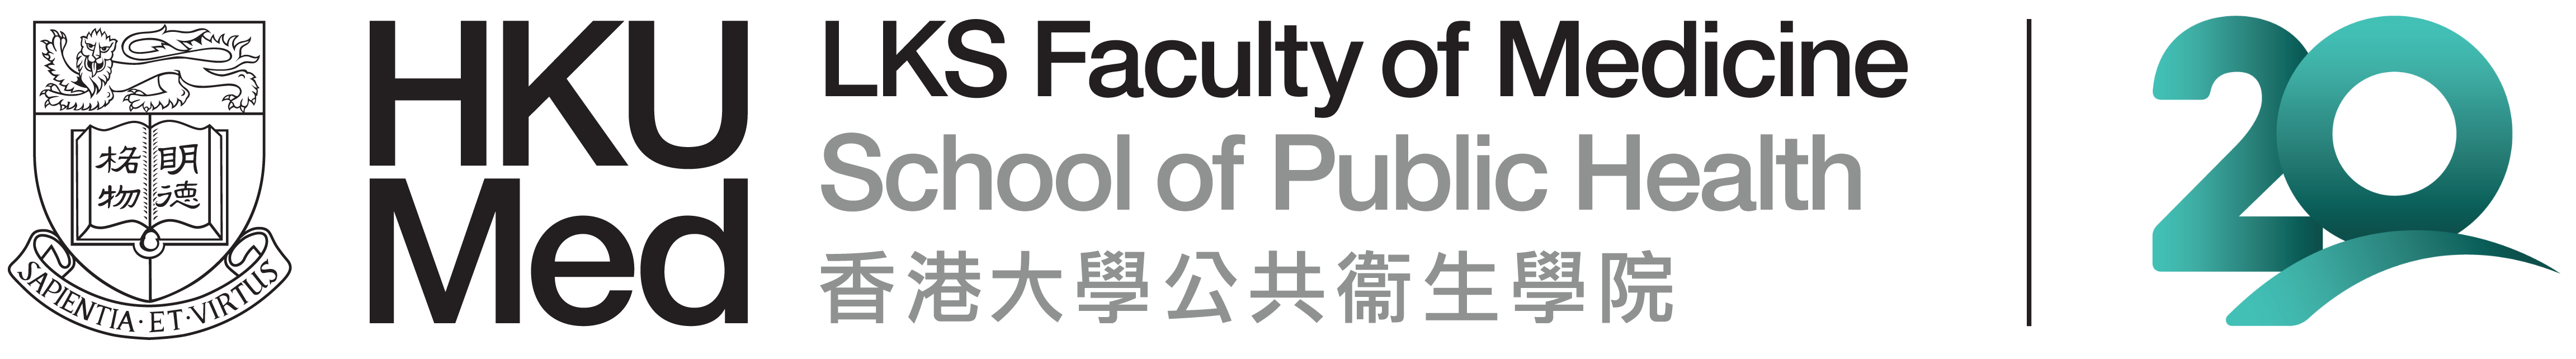 Li Ka Shing Faculty of Medicine, The University Of Hong Kong